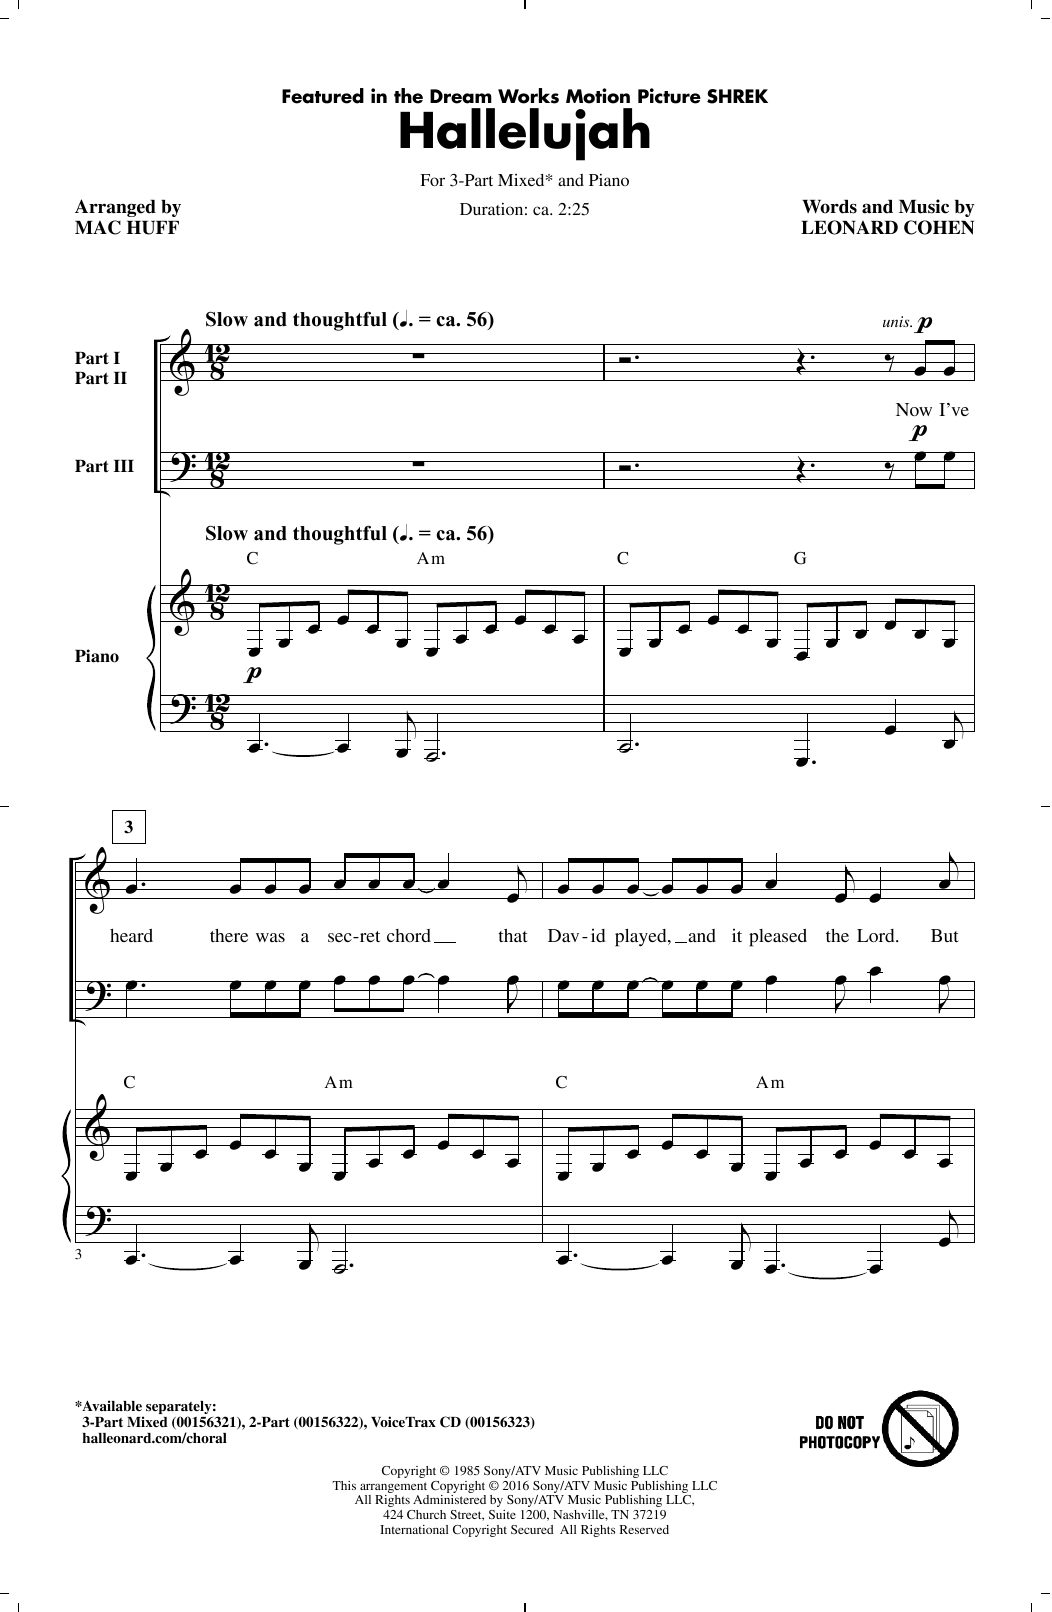 Leonard Cohen Hallelujah (arr. Mac Huff) Sheet Music Notes & Chords for 2-Part Choir - Download or Print PDF